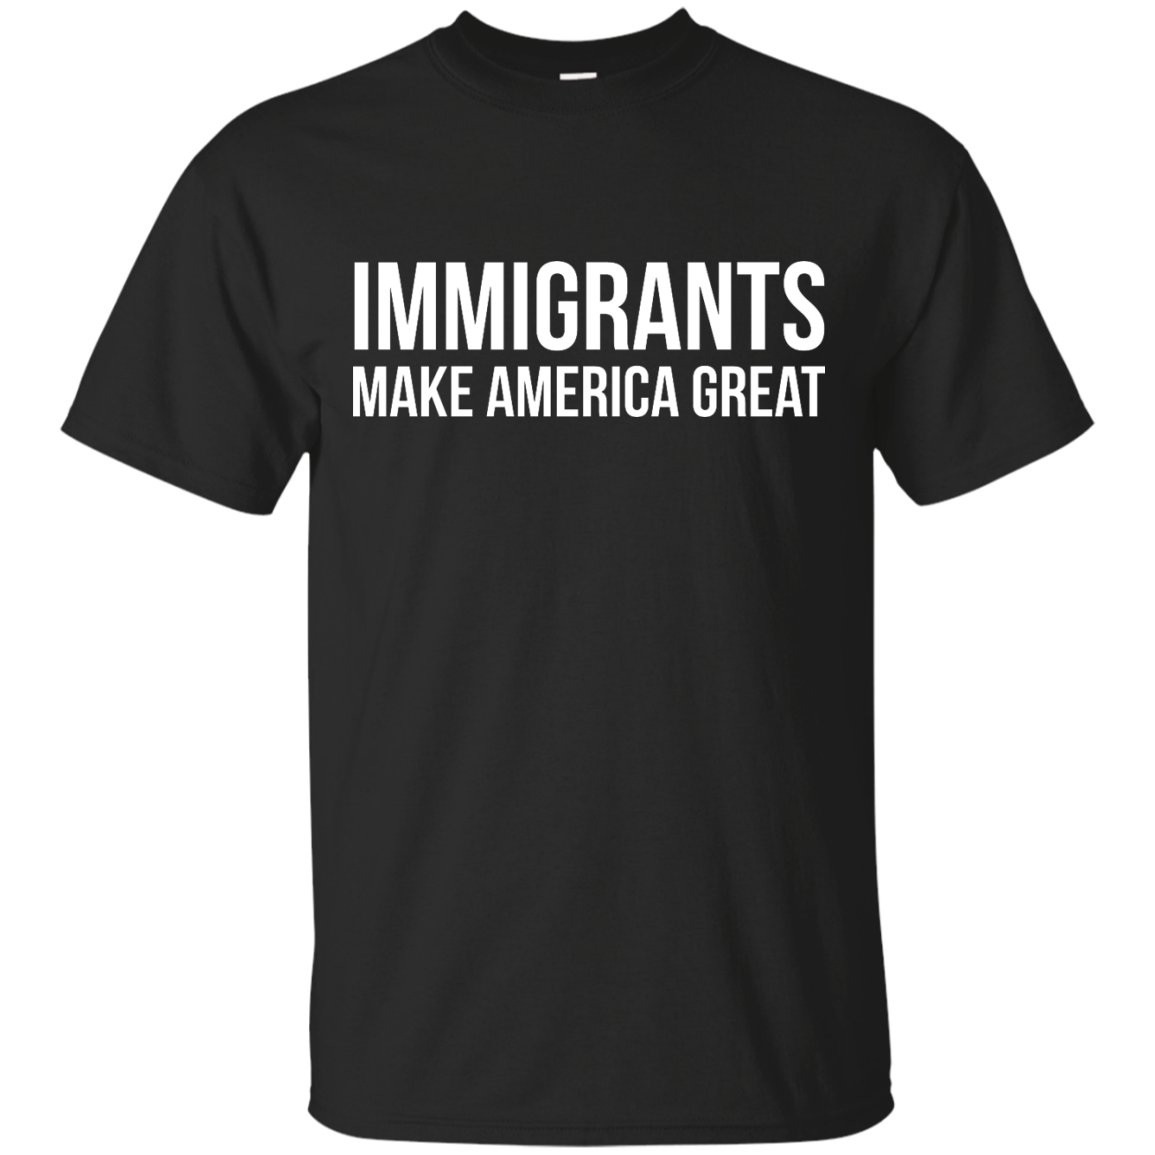 Immigrants make America great shirt, long sleeve